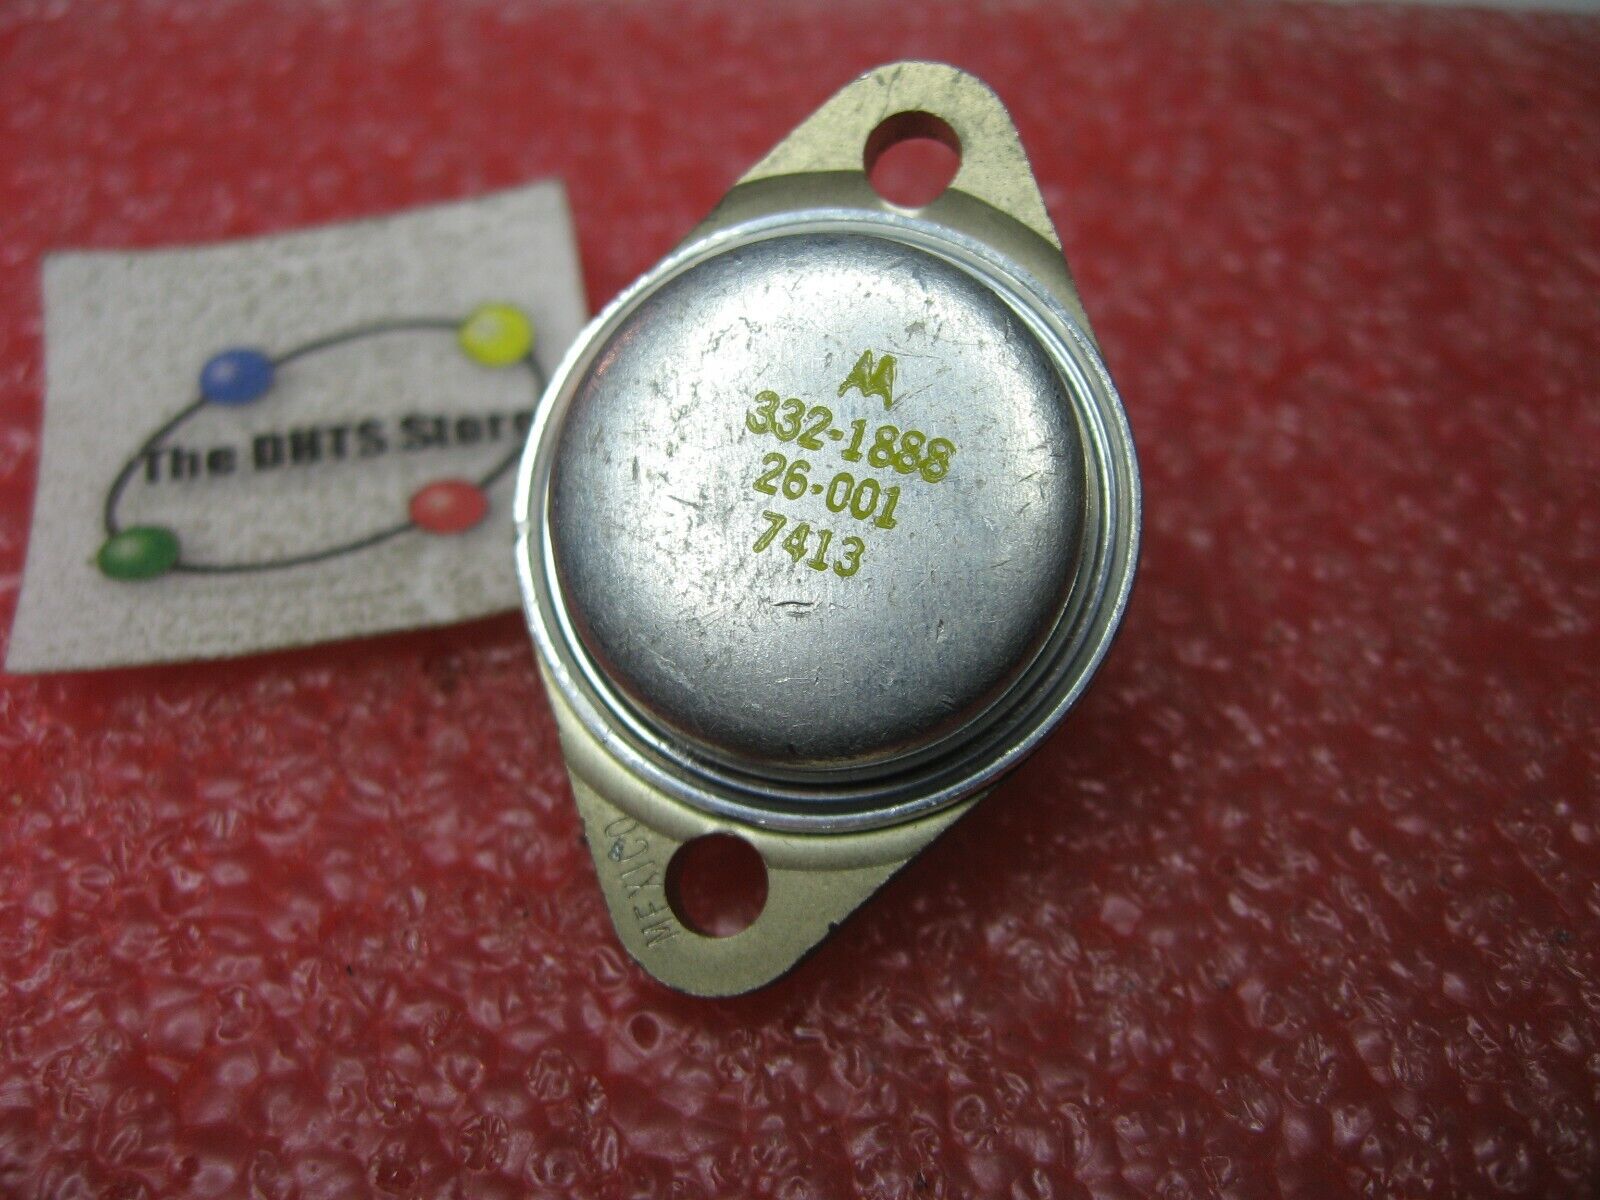 332-1888 26-001 Motorola PNP Germanium Power Transistor TO-3  NOS Qty 1 